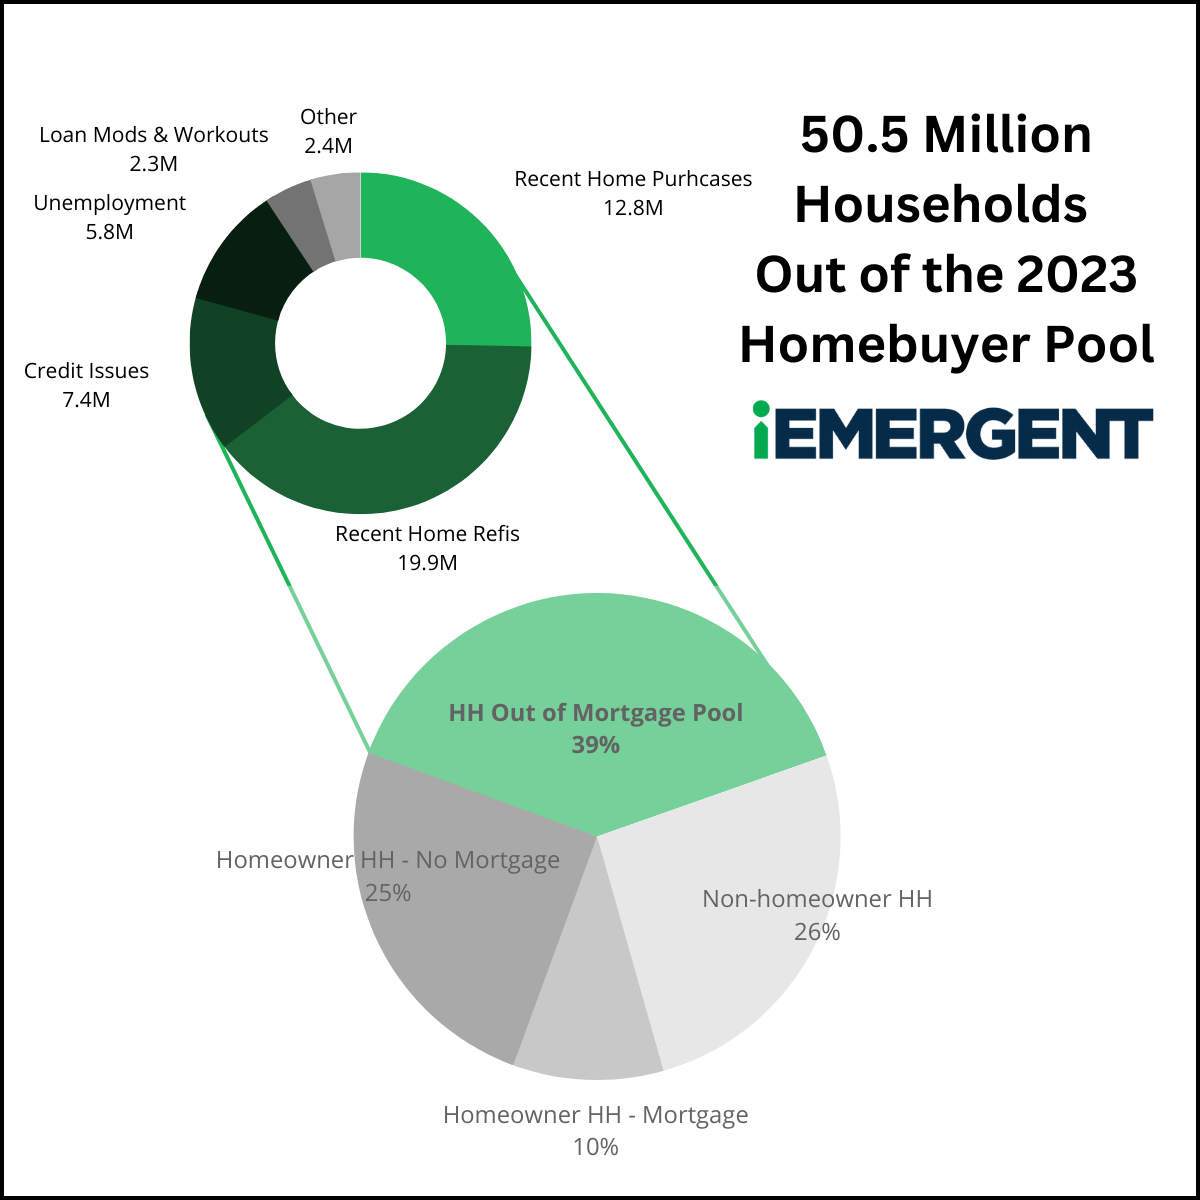 iEmergent - Homebuyer Pool 2023